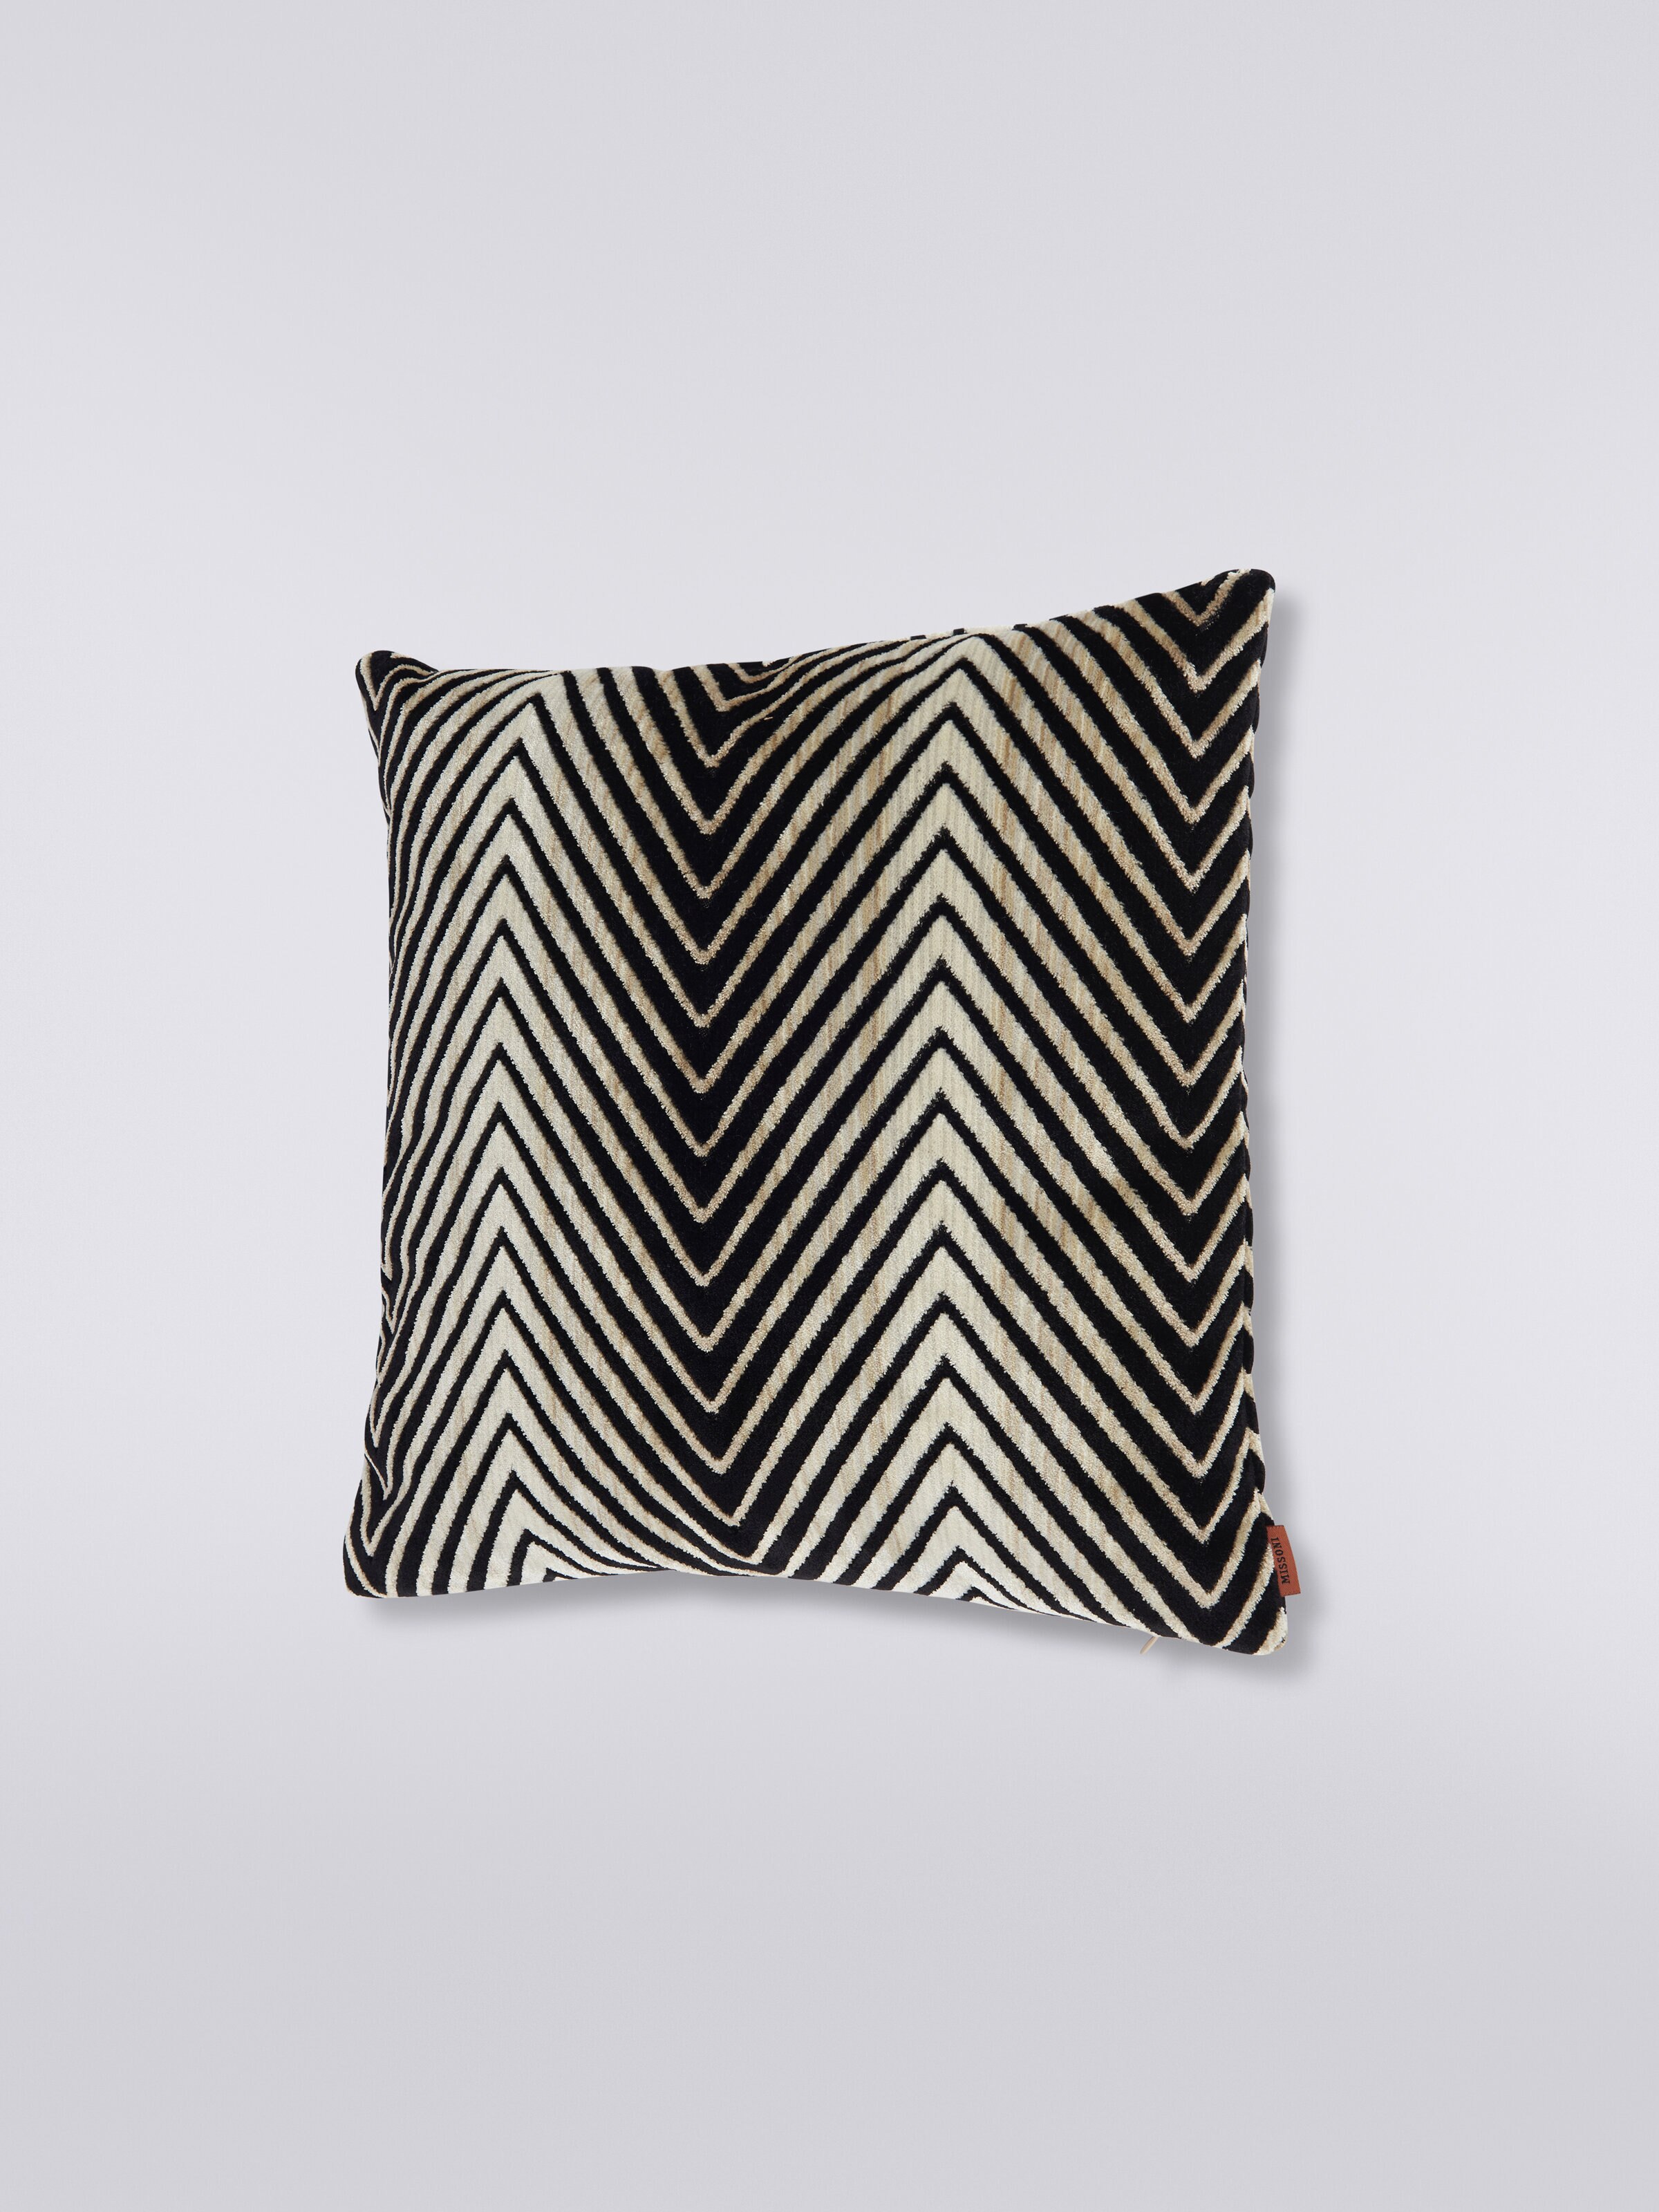 Ziggy 40x40 cm viscose blend zigzag cushion, Black & White - 1